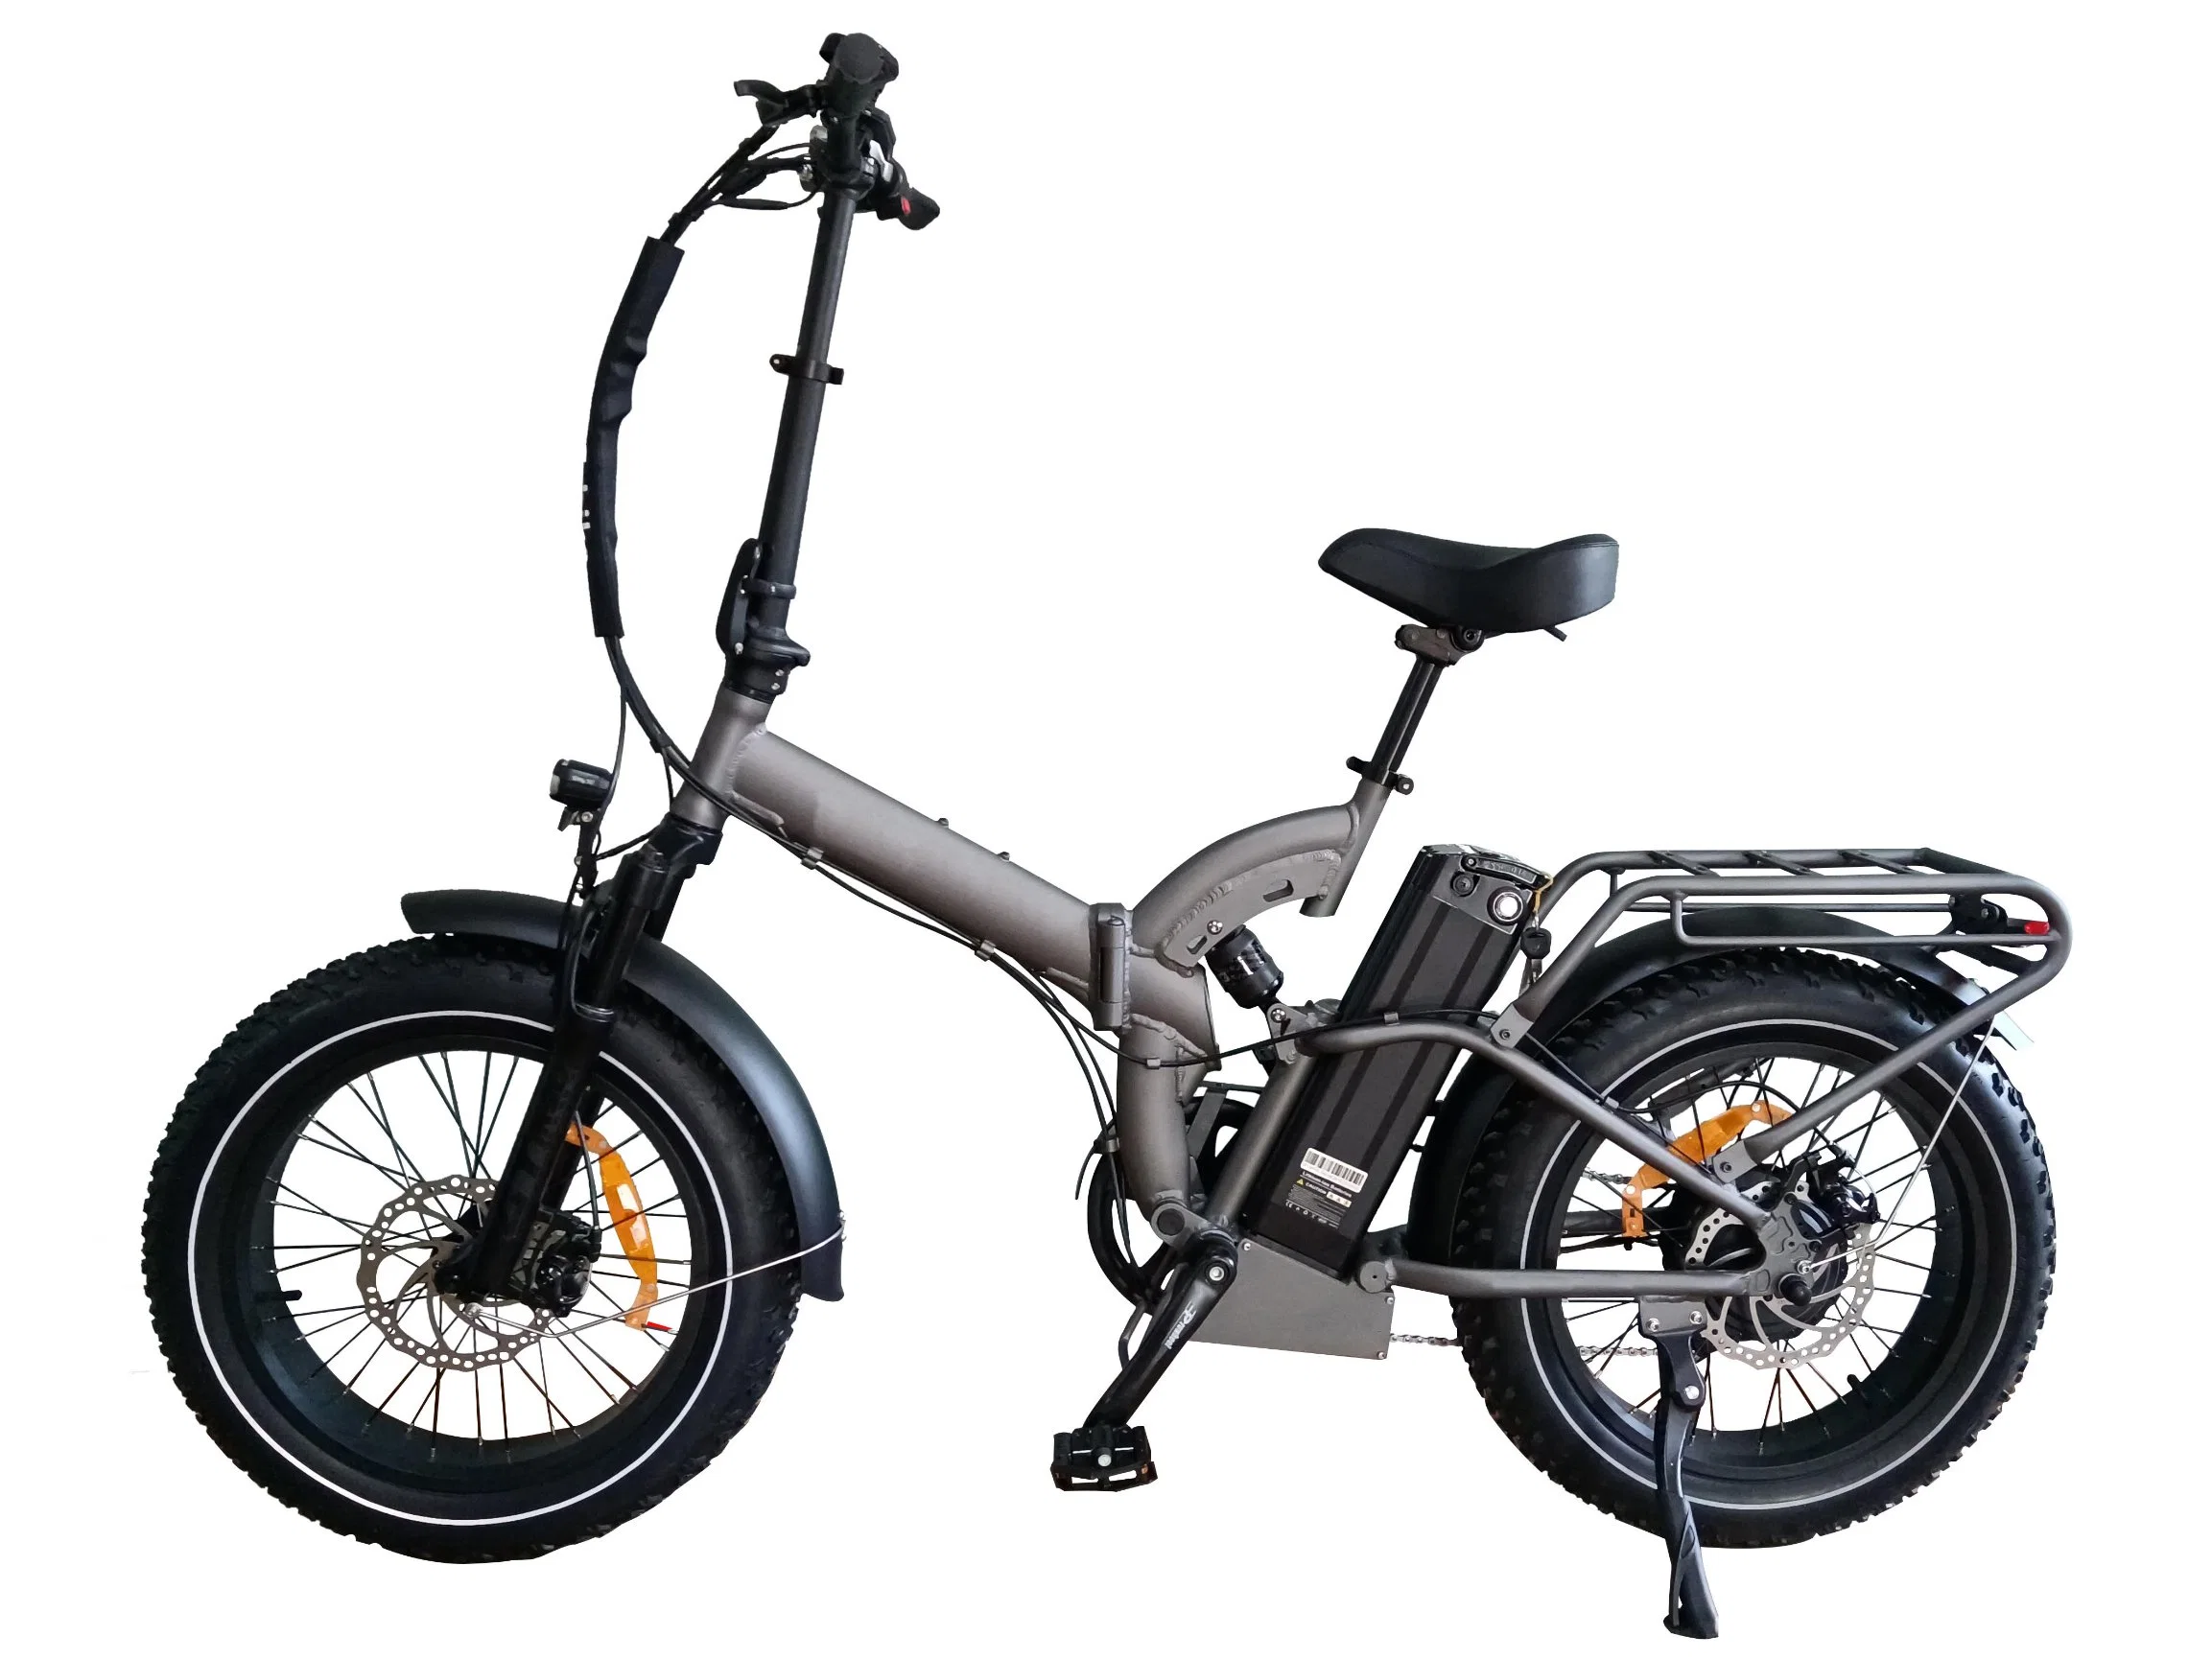 Queene/Fat motorizado de neumáticos bombardero Stealth bicicleta eléctrica 48V750W grasa bicicleta eléctrica plegable 1000W/eléctrica bicicleta plegable